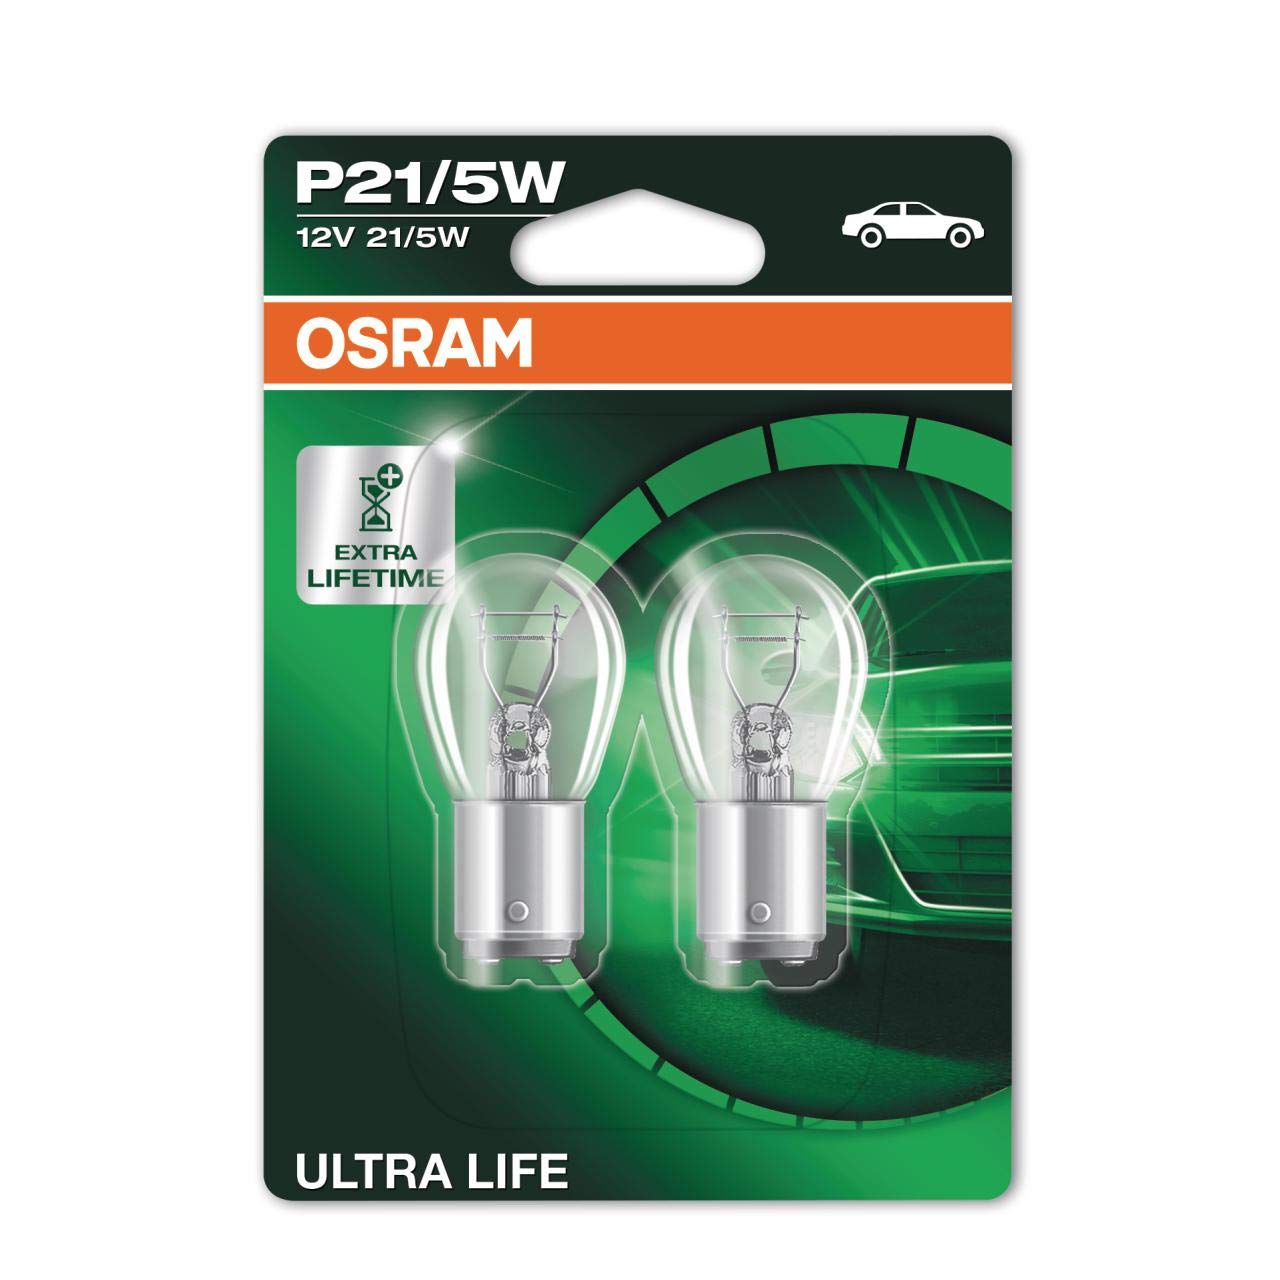 OSRAM ULTRA LIFE P21/5W halogen signal lamp, brake light, rear fog light, 7528ULT - 02B, 12 V passenger car, double blister (2 units) - Ammpoure Wellbeing